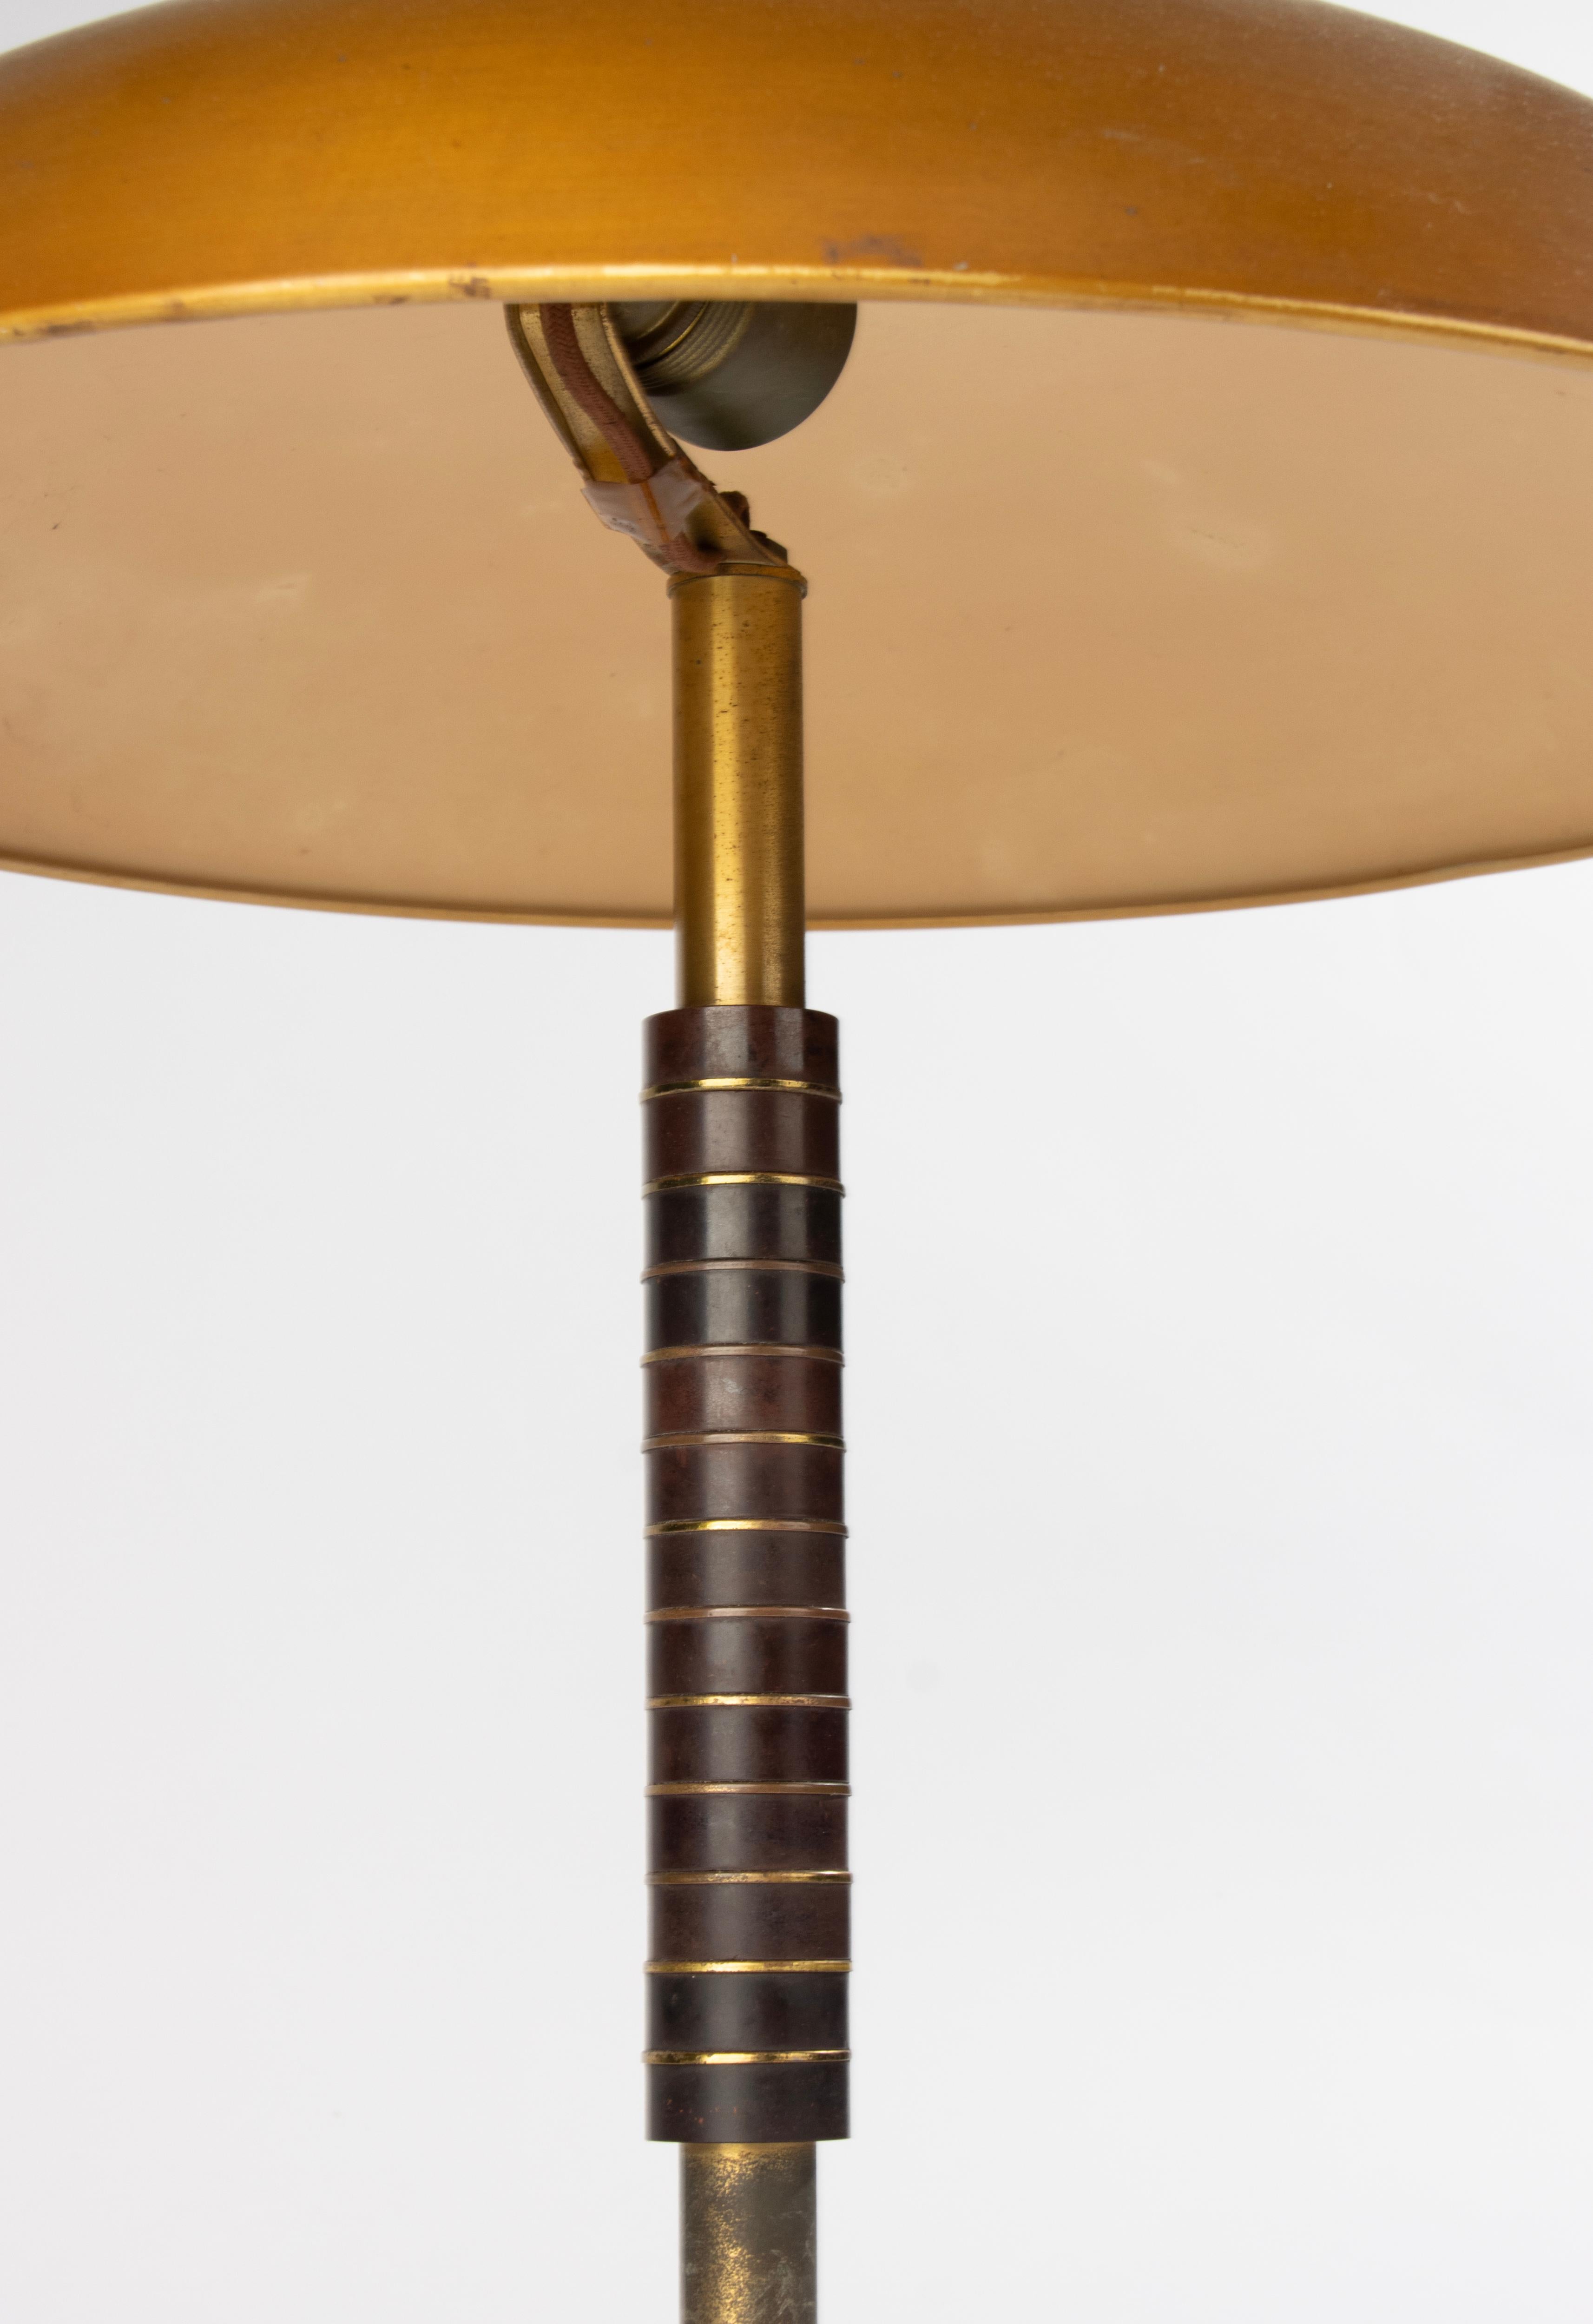 Vintage Bauhaus Table Lamp - 1940's - Bakelite and Metal  For Sale 5